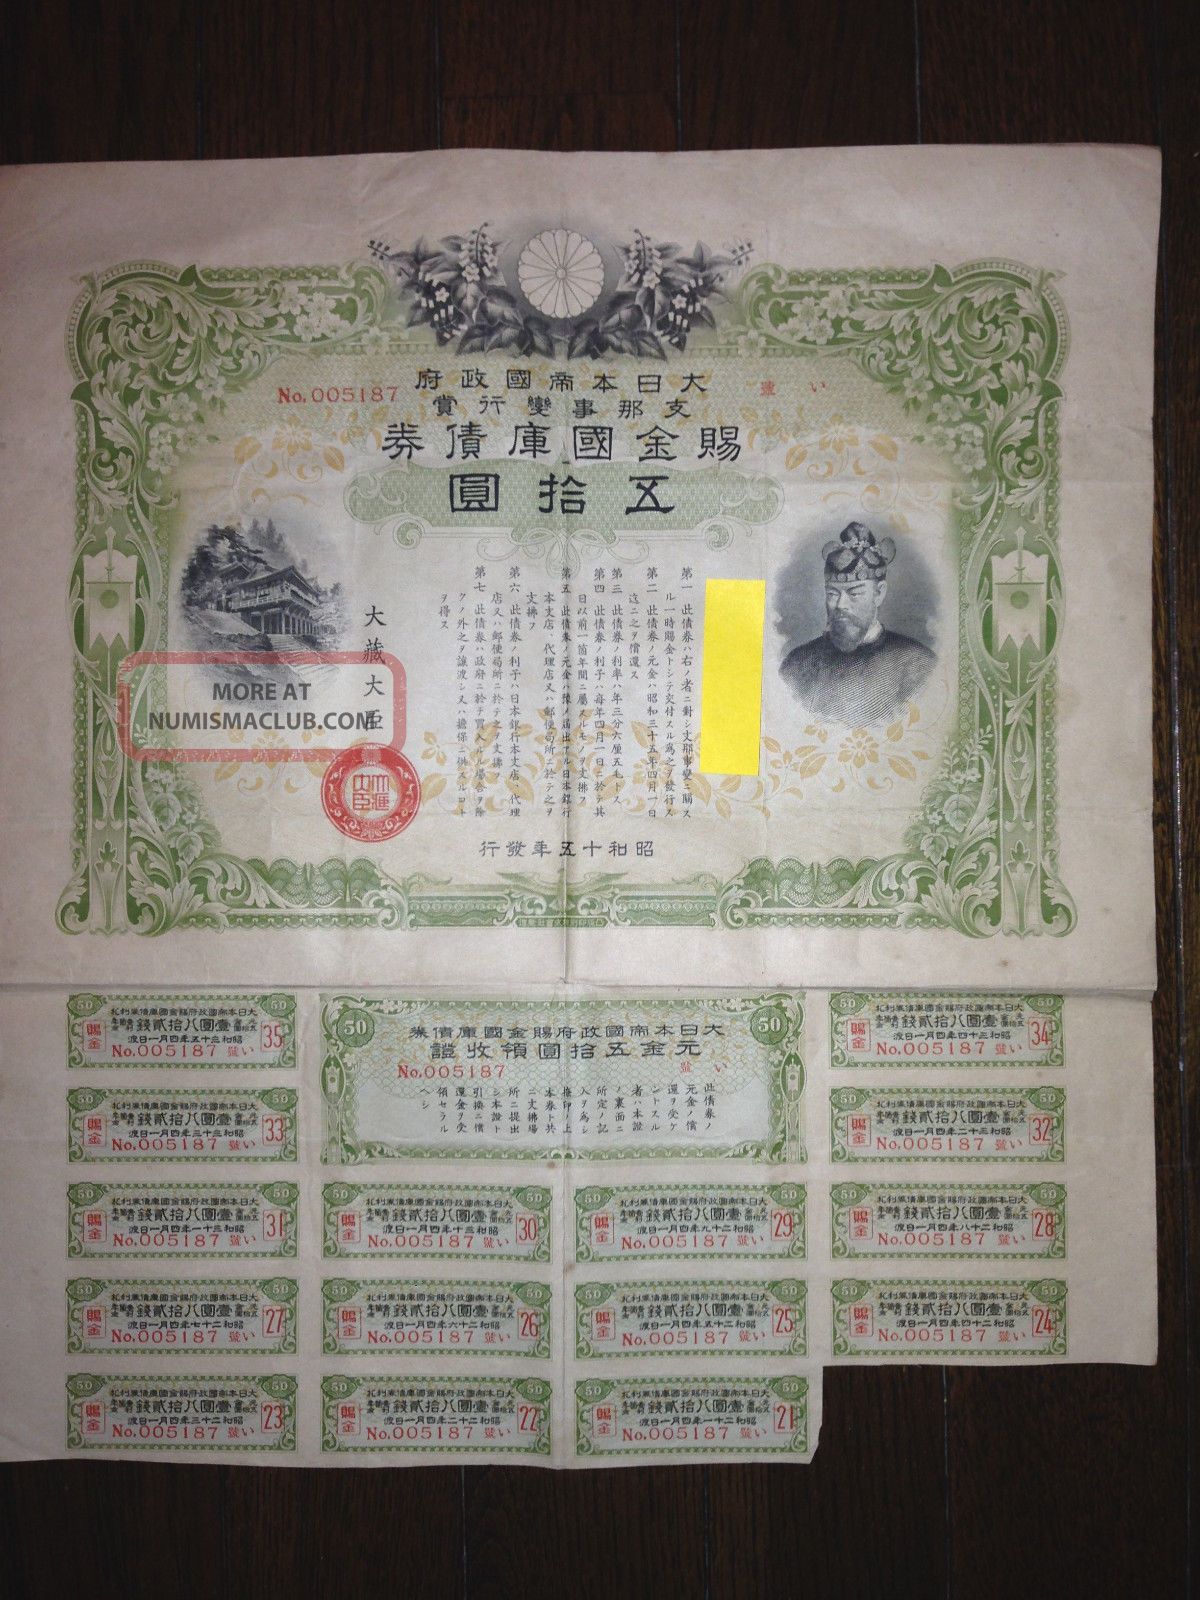 1940.  Sino - Japanese War.  Ww2 Imperial Government Bond Of Japan.  Japan - China War Stocks & Bonds, Scripophily photo